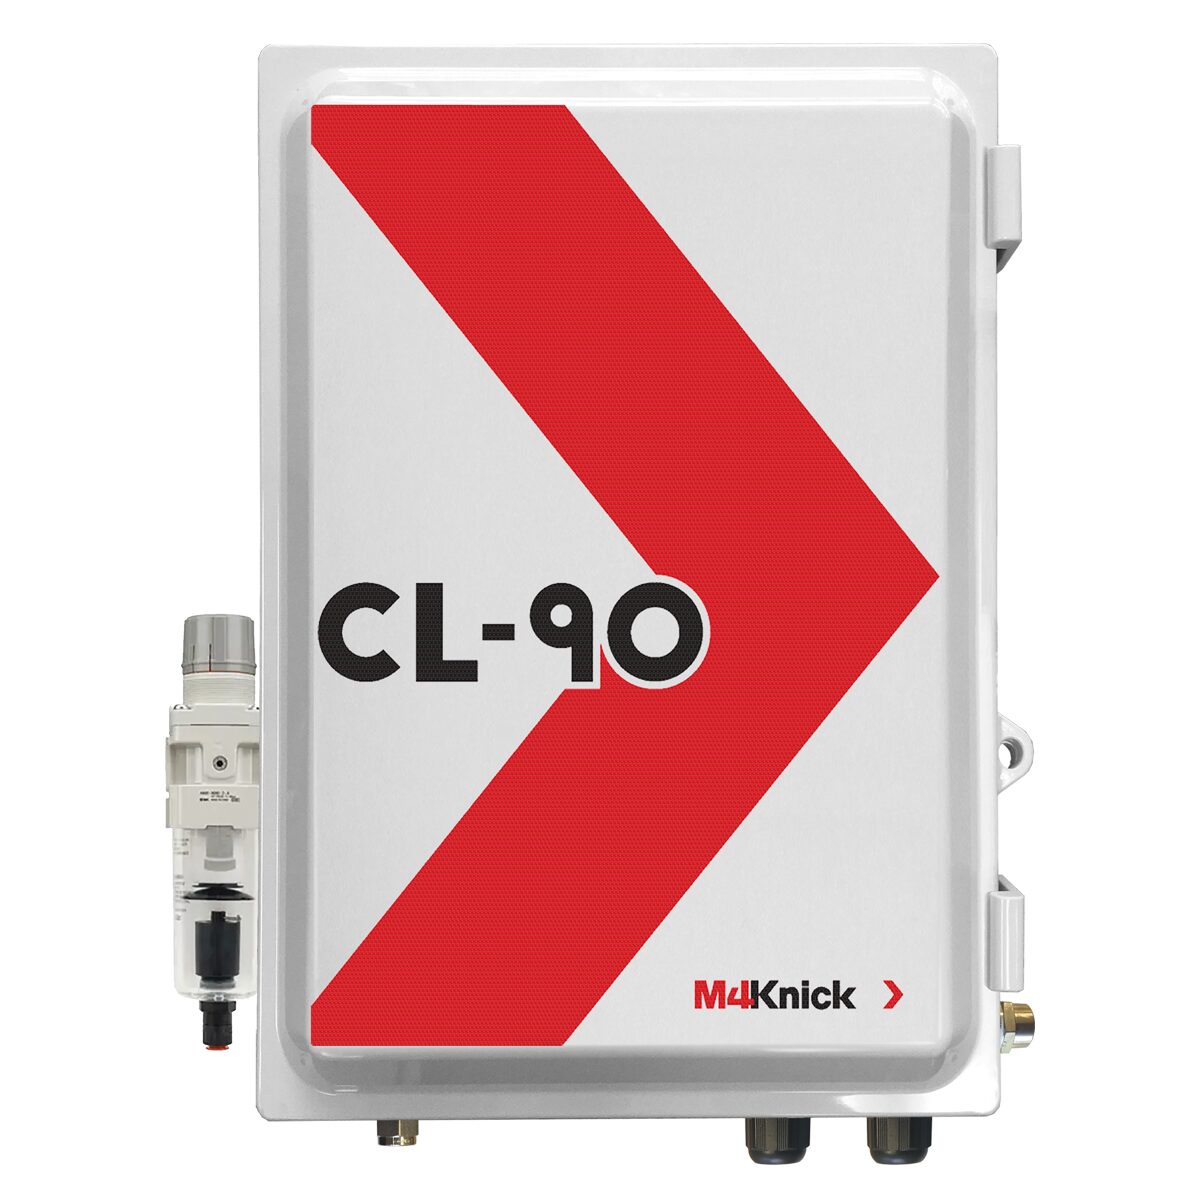 CL-90 Control Box